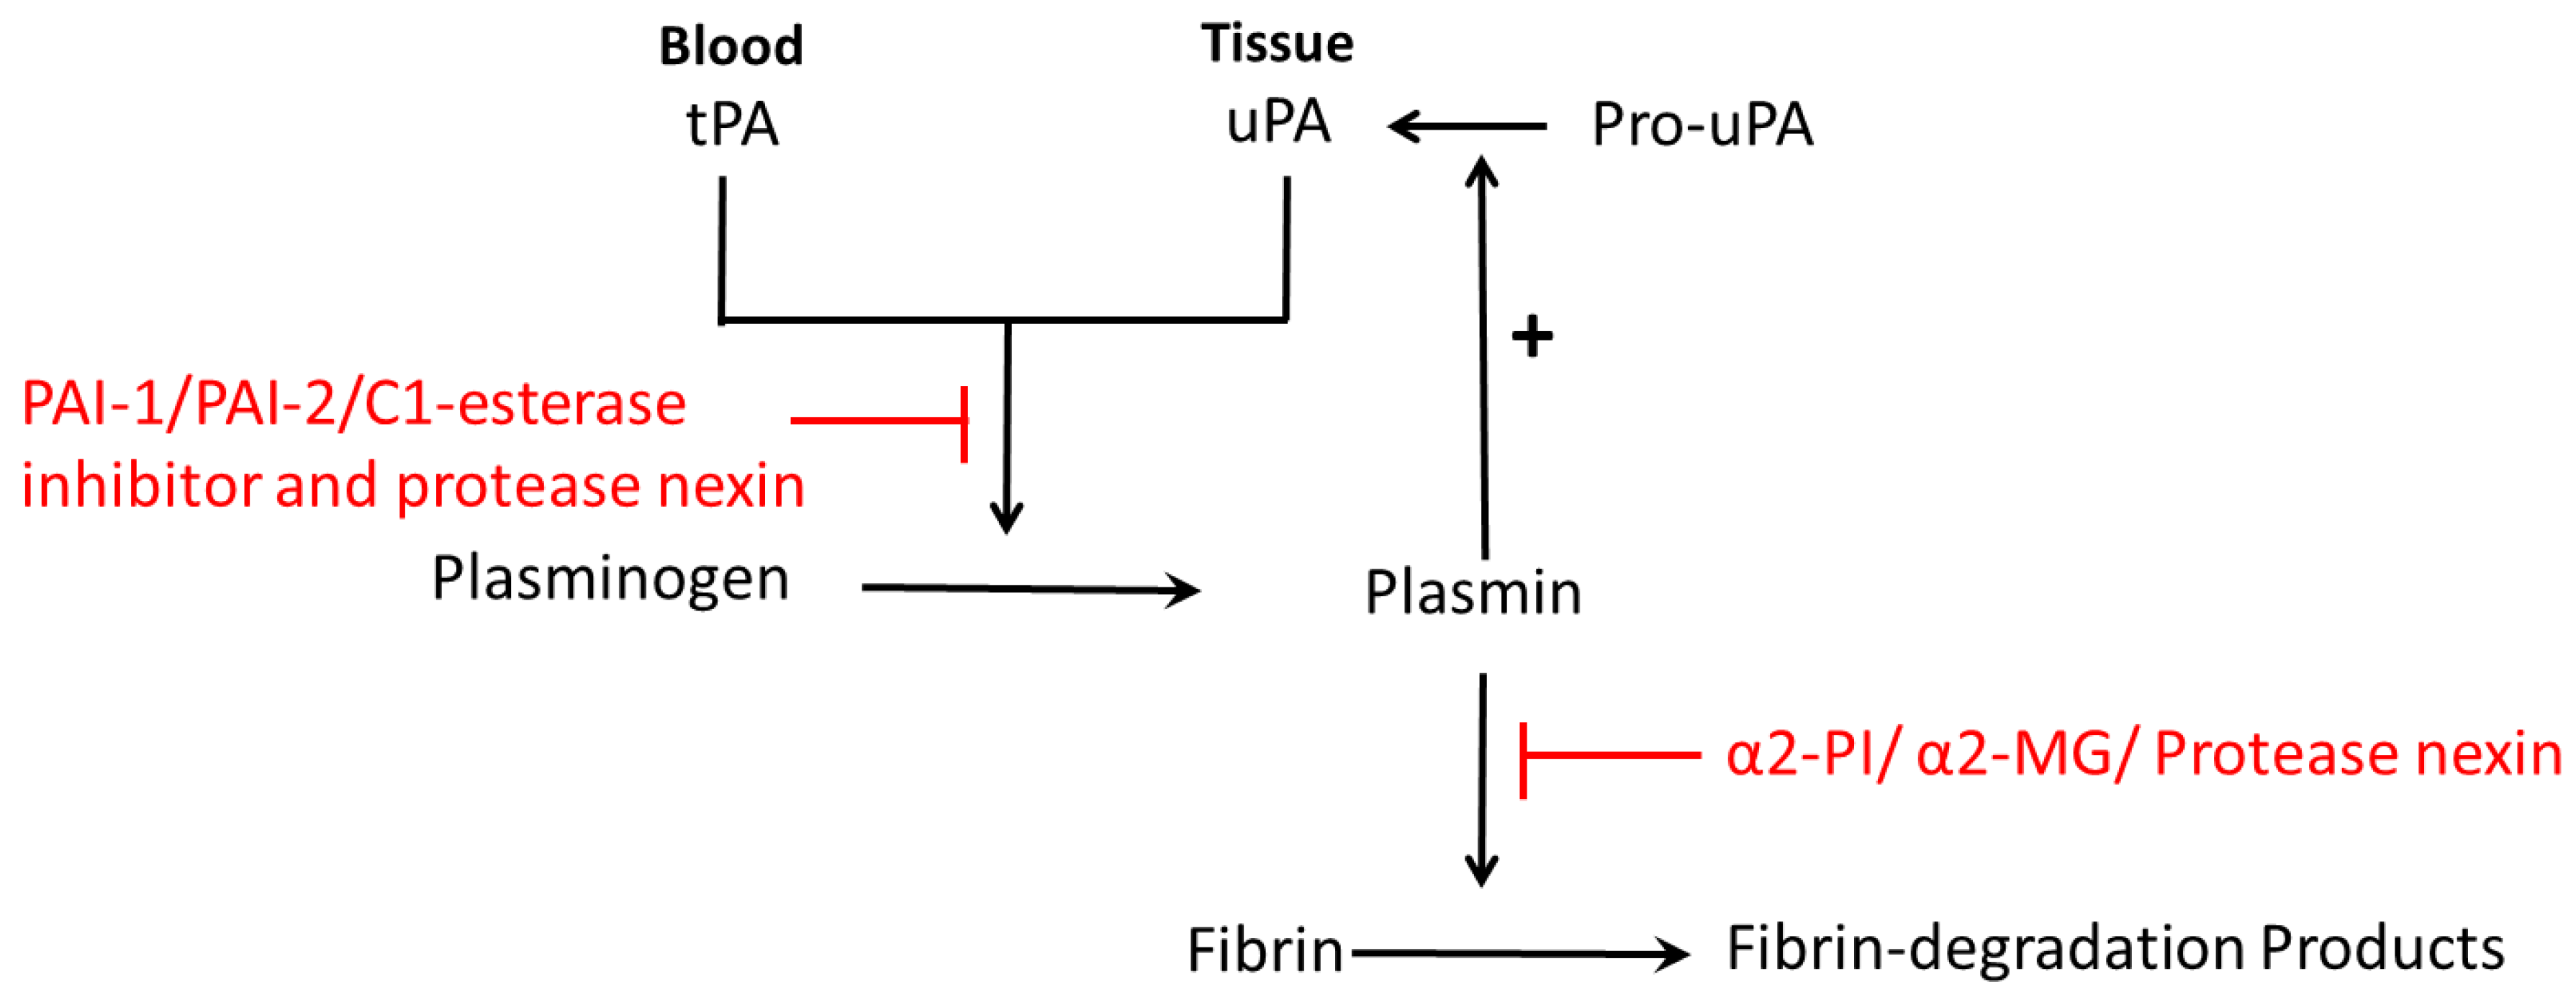 Plasminogen Activator Inhibitor-1 Is a Marker and a Mediator of